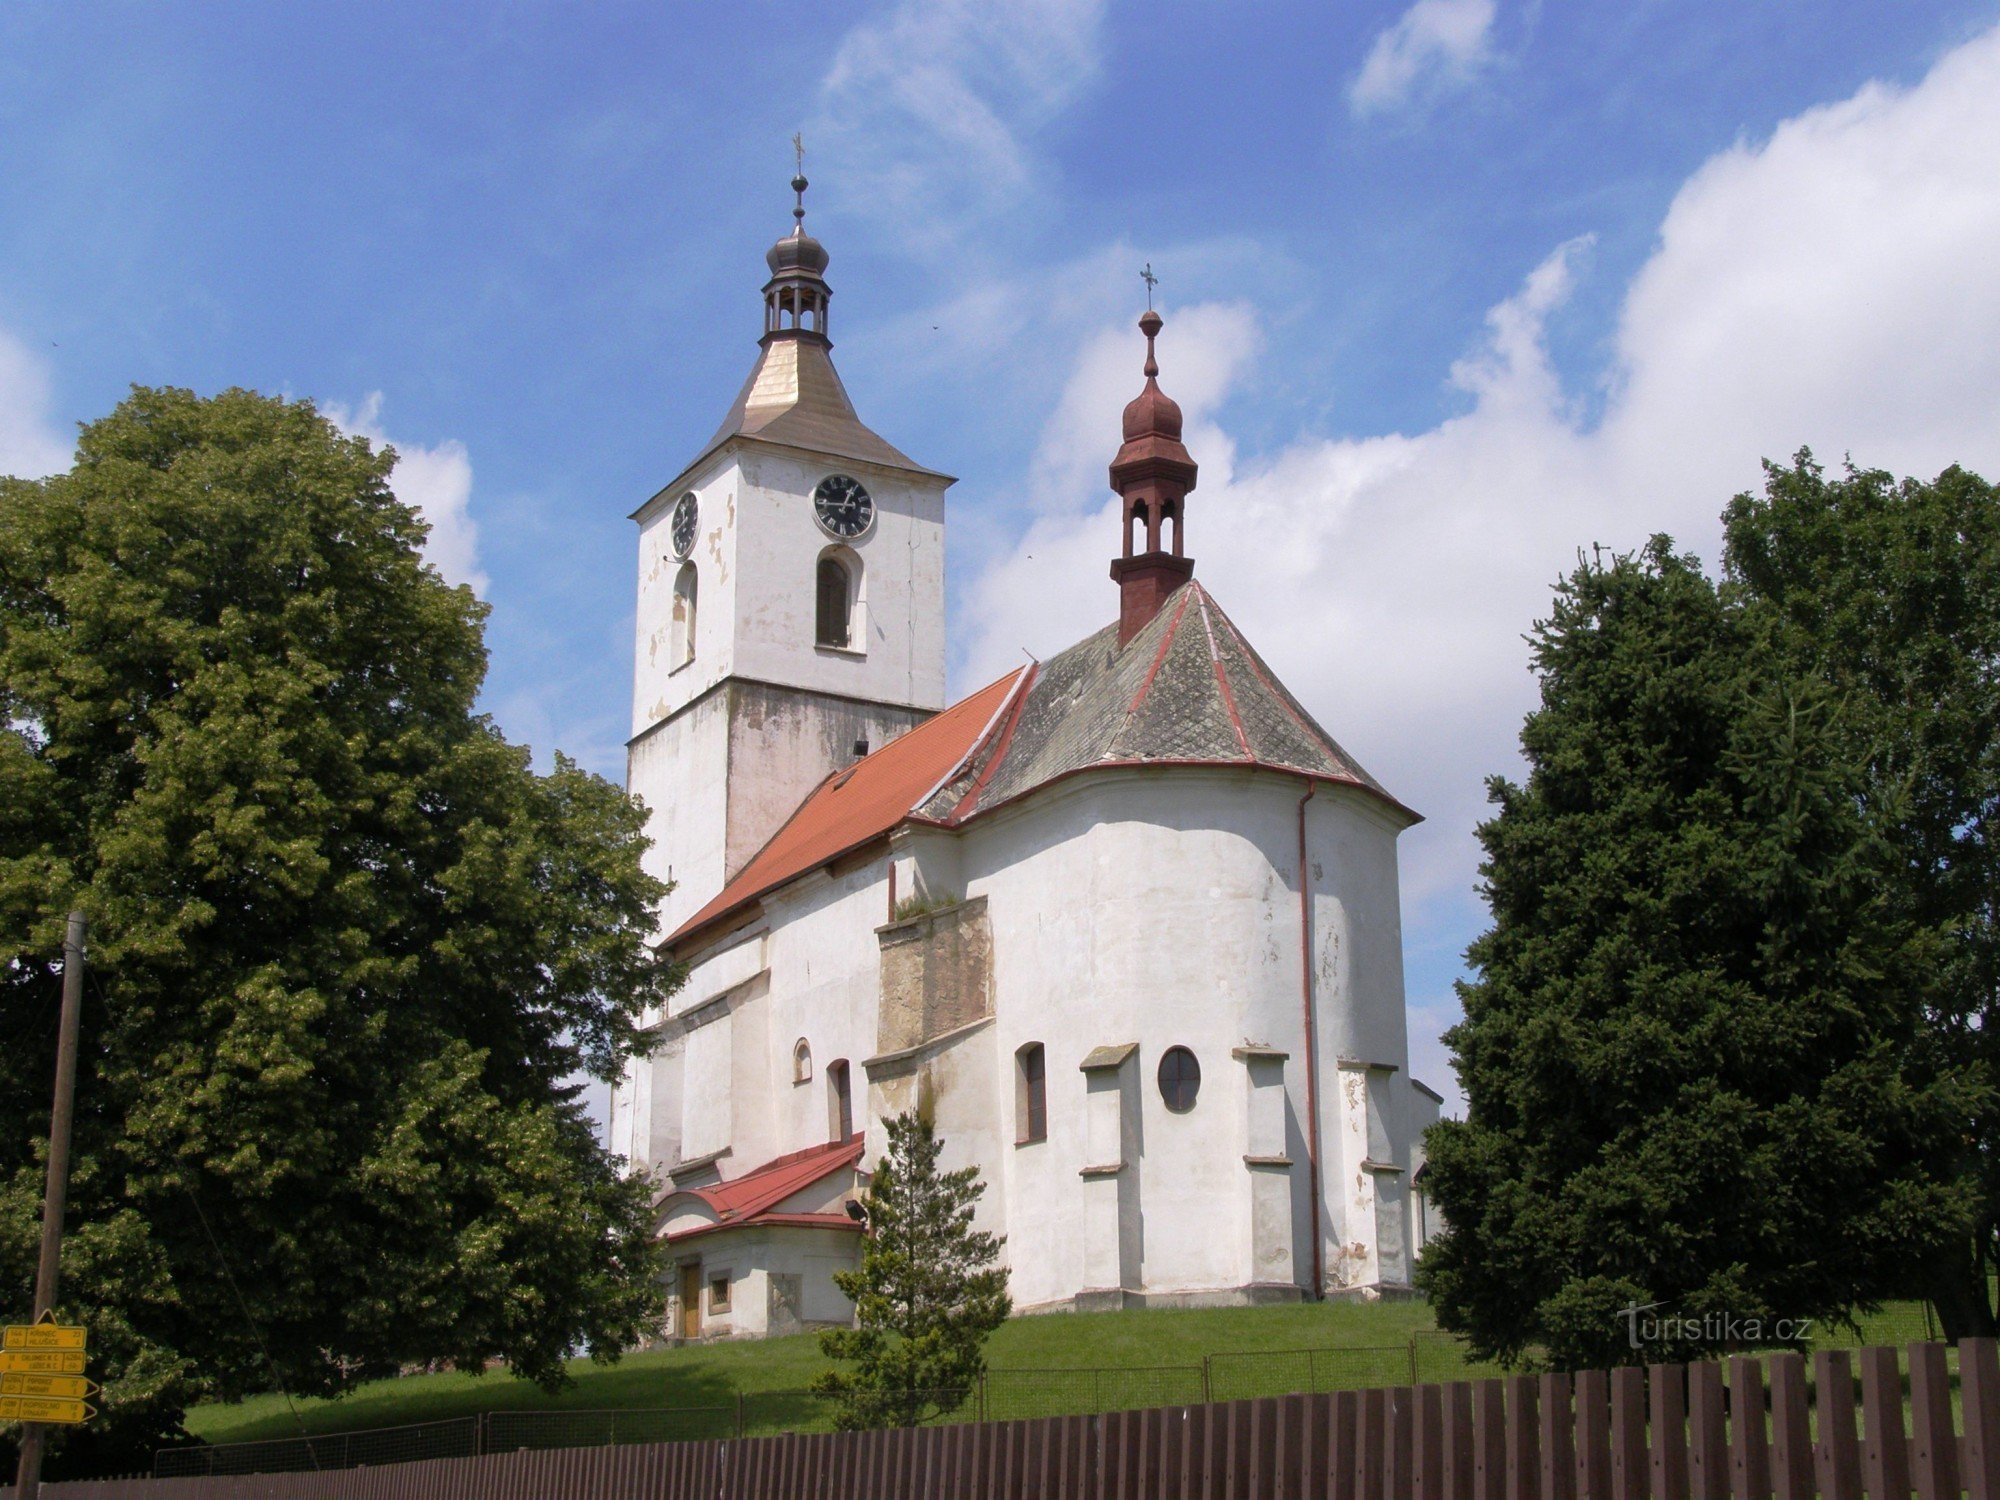 Starý Bydžov - nhà thờ St. Procopius